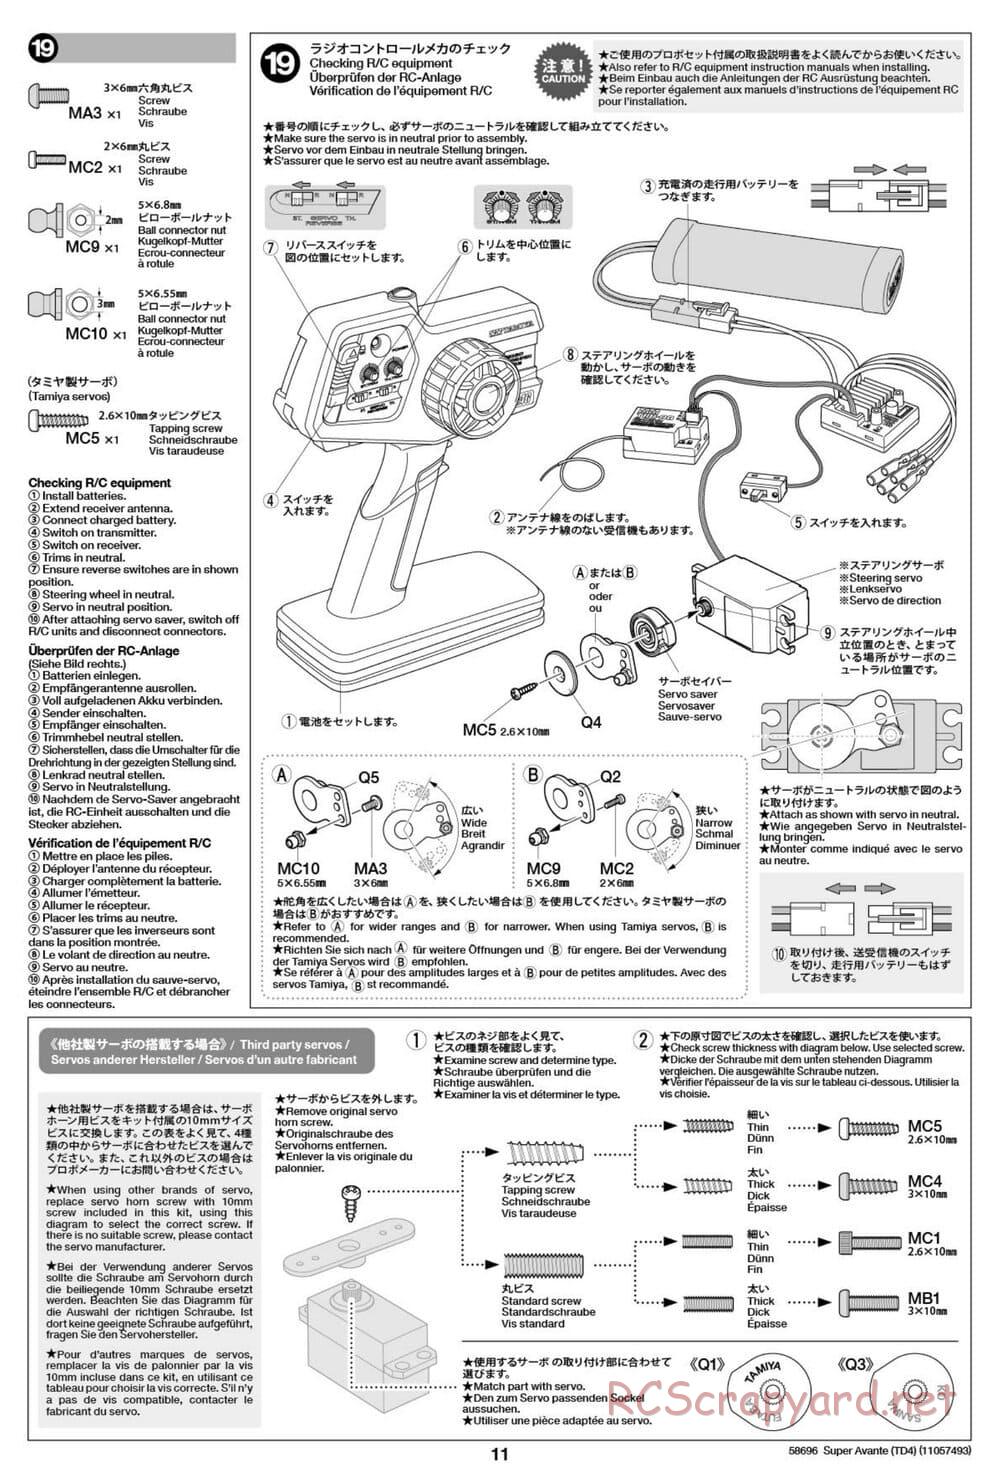 Tamiya - Super Avante - TD4 Chassis - Manual - Page 12